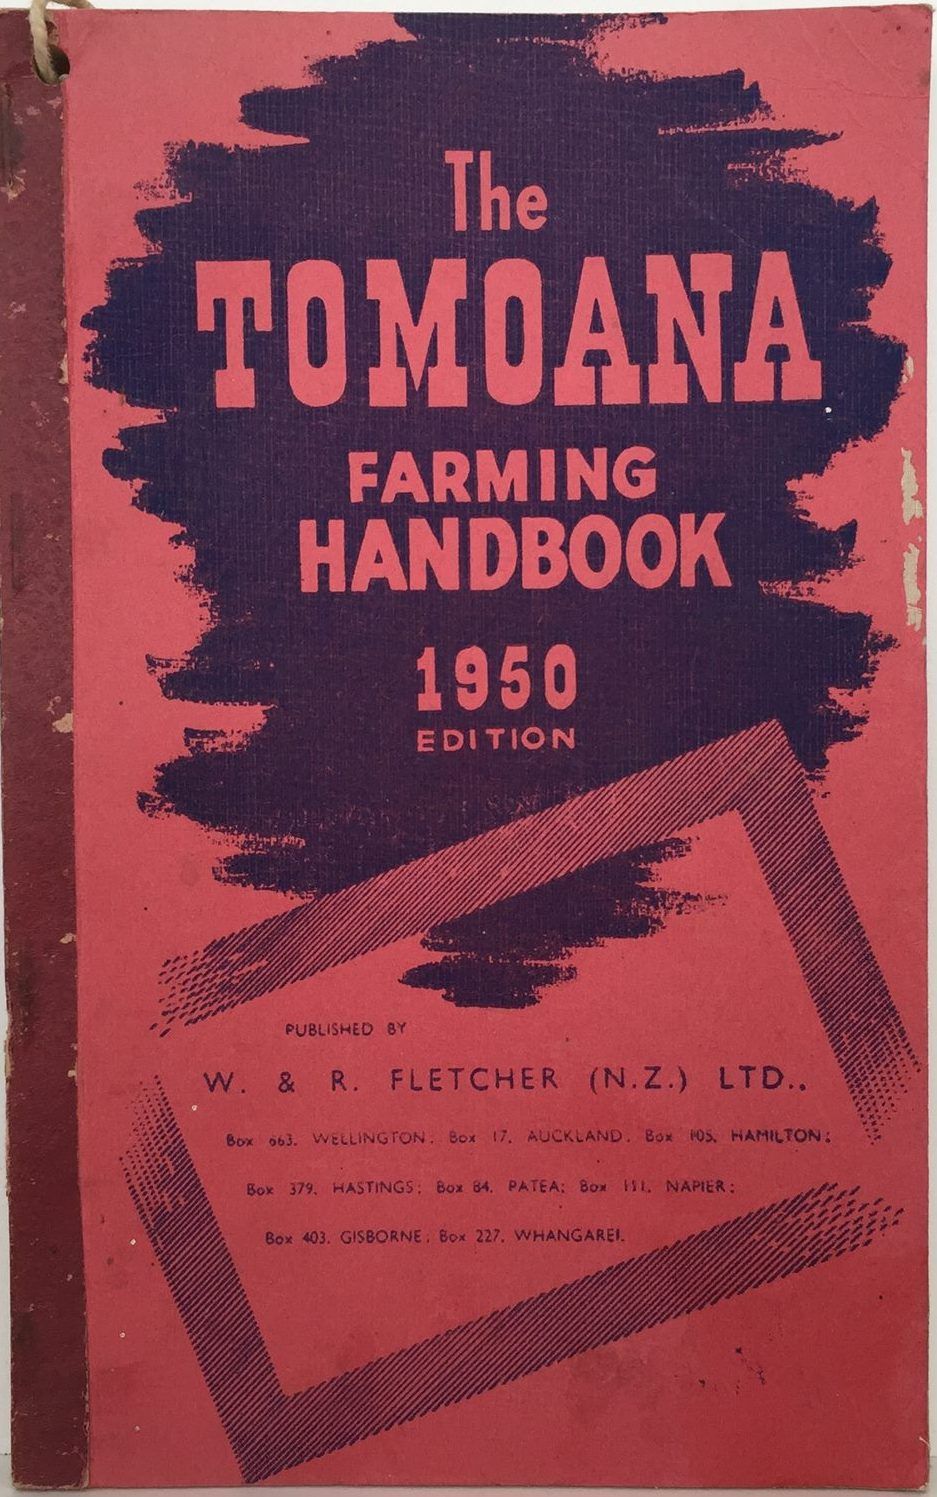 The Tomoana Farming Handbook